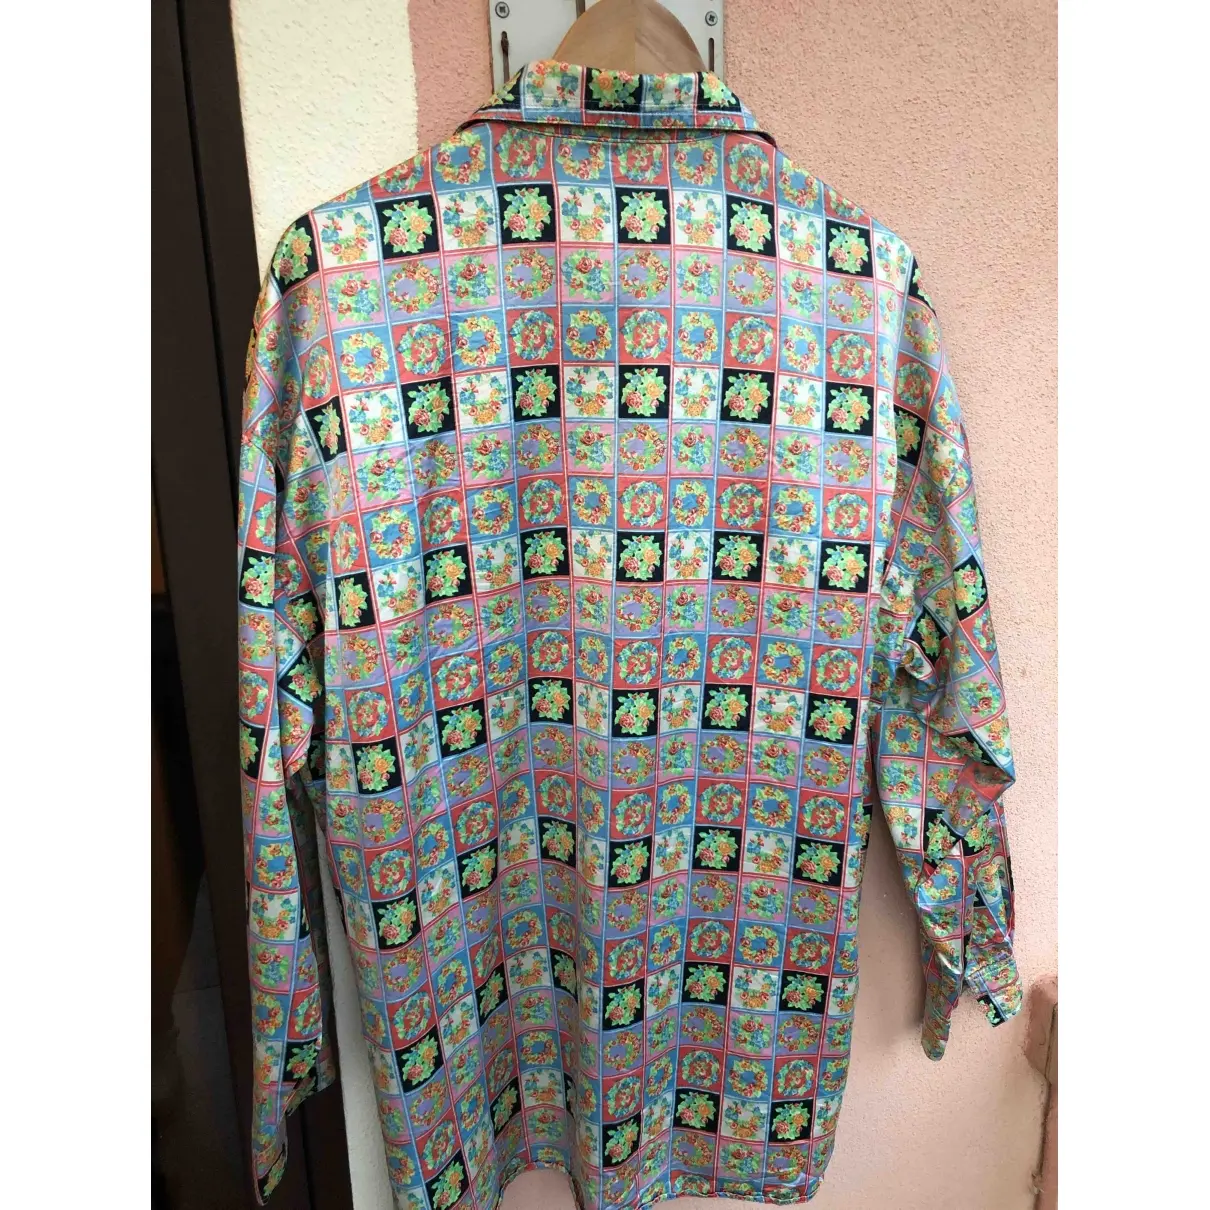 Versus Silk shirt for sale - Vintage